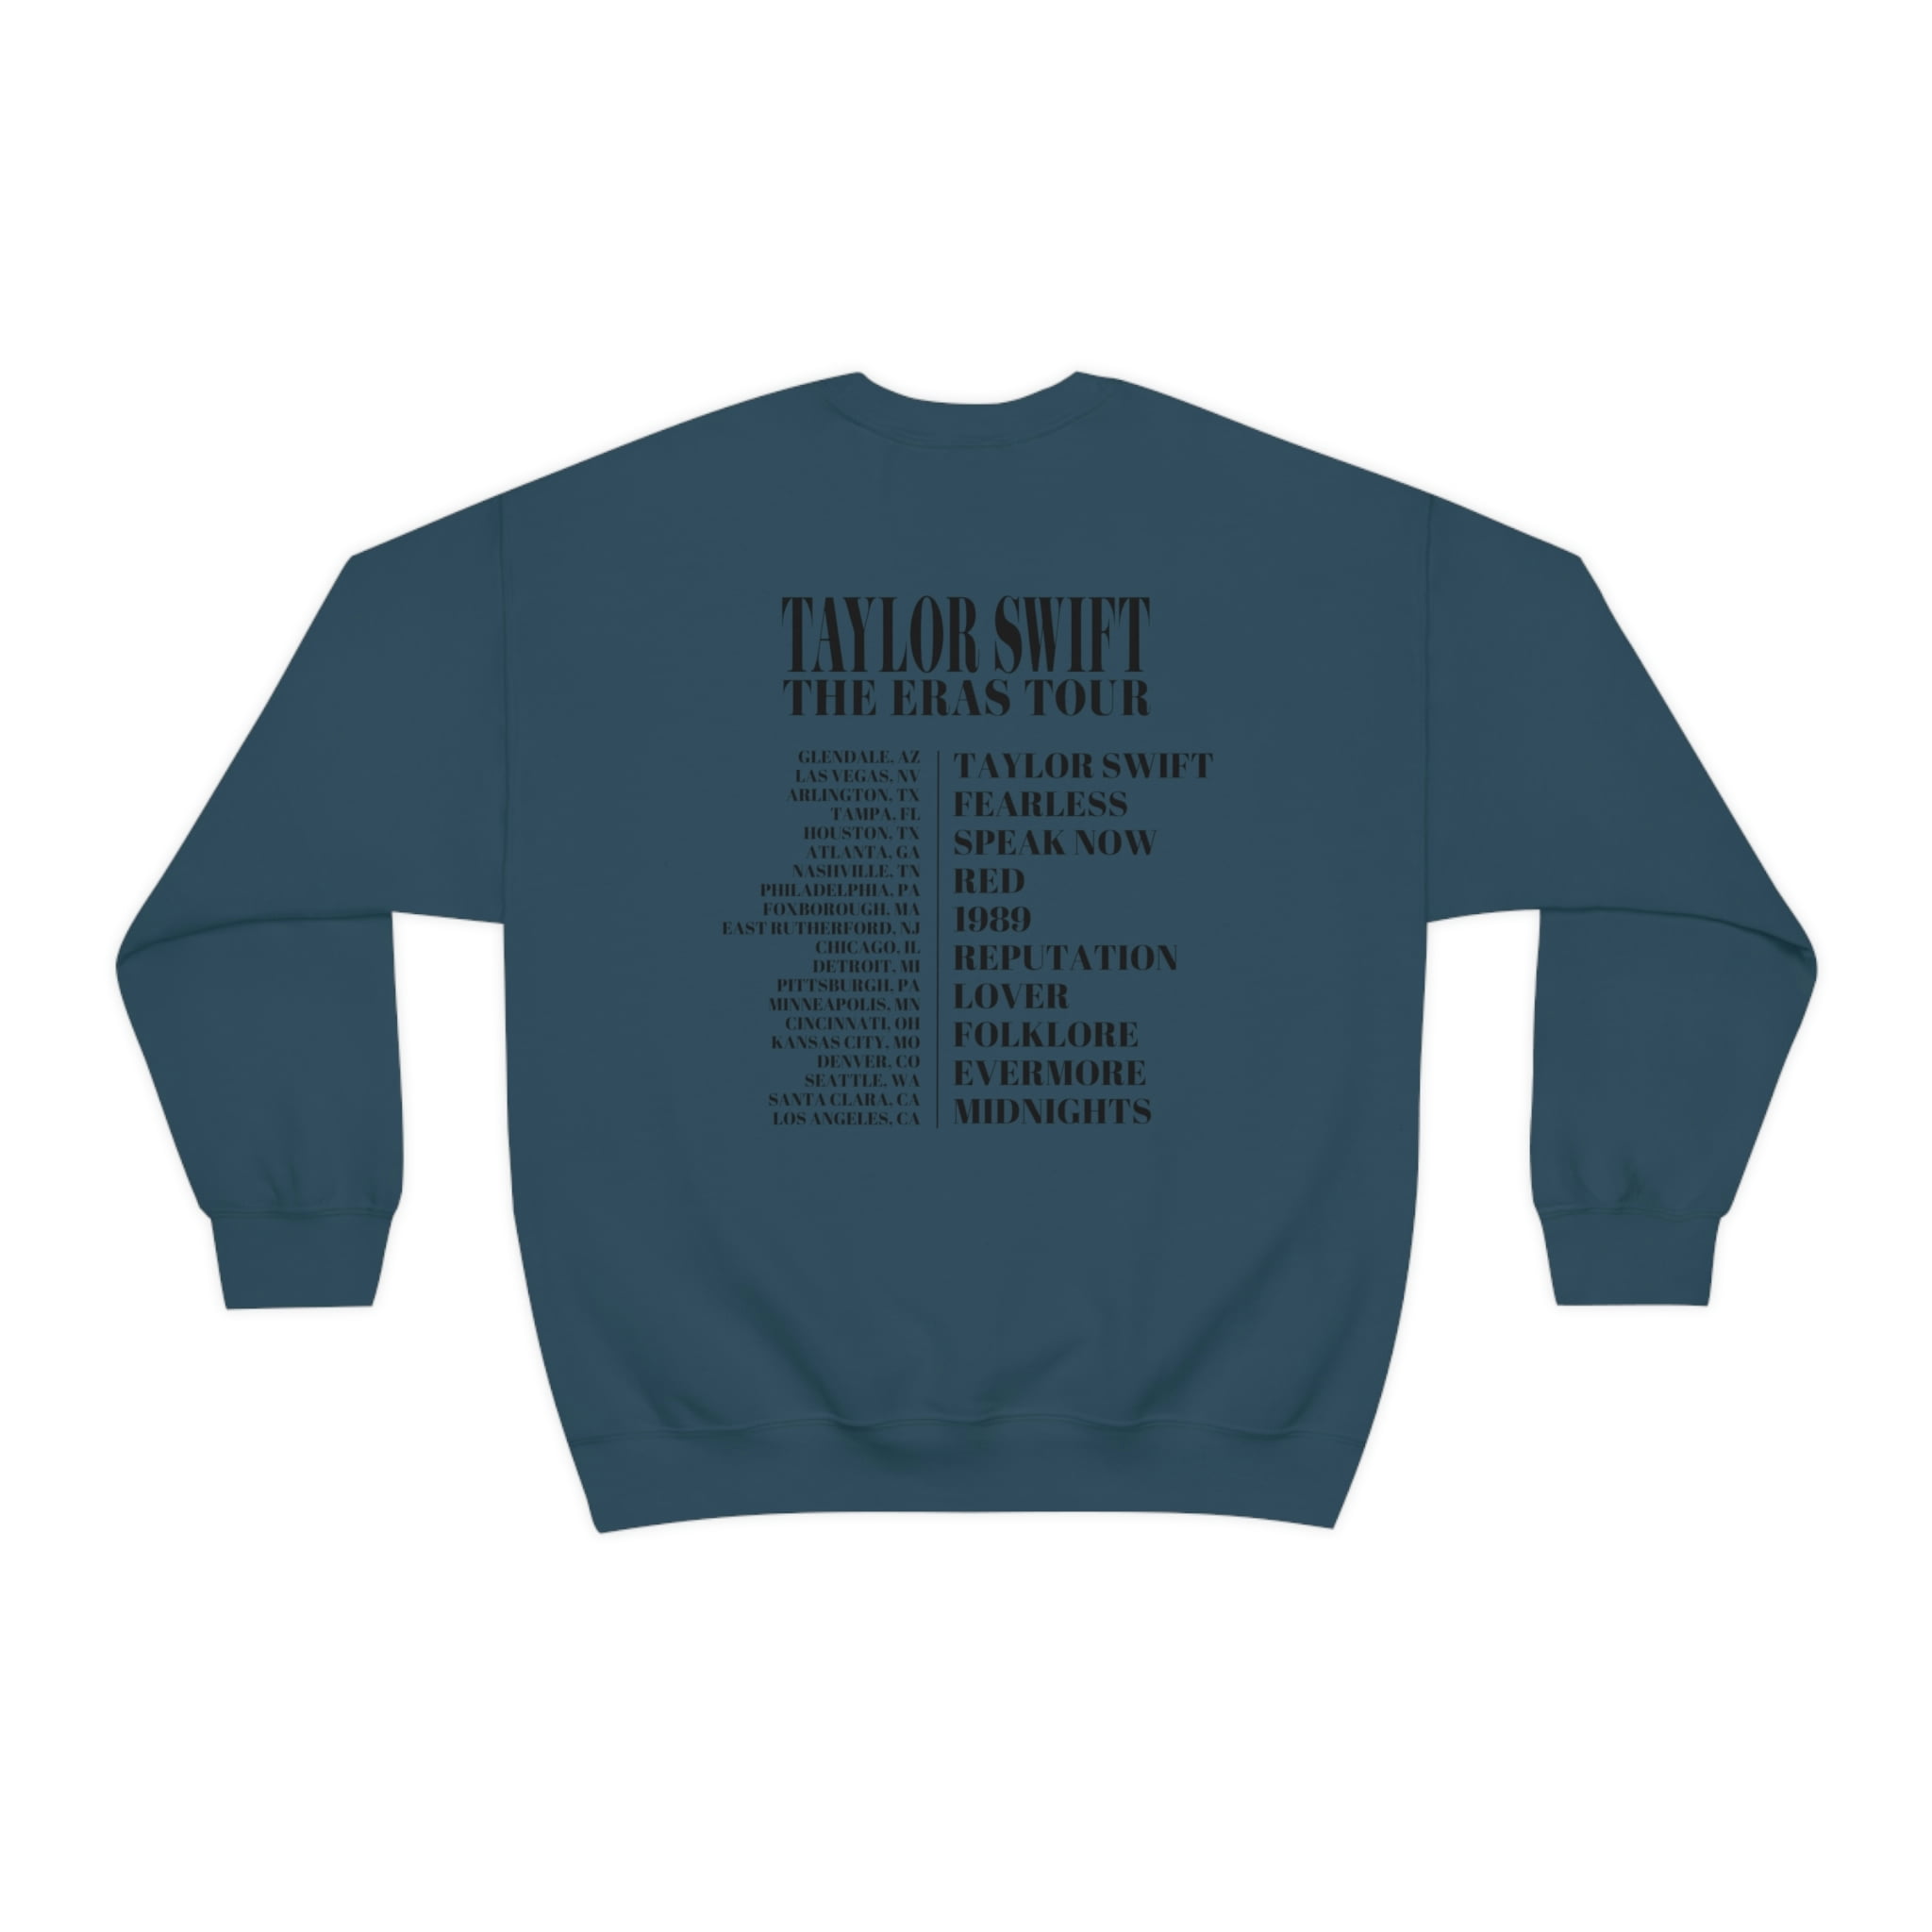 Taylor Swift Eras Tour Blue Crewneck Sweatshirt Limited Edition Merch Dupe, Size: Small